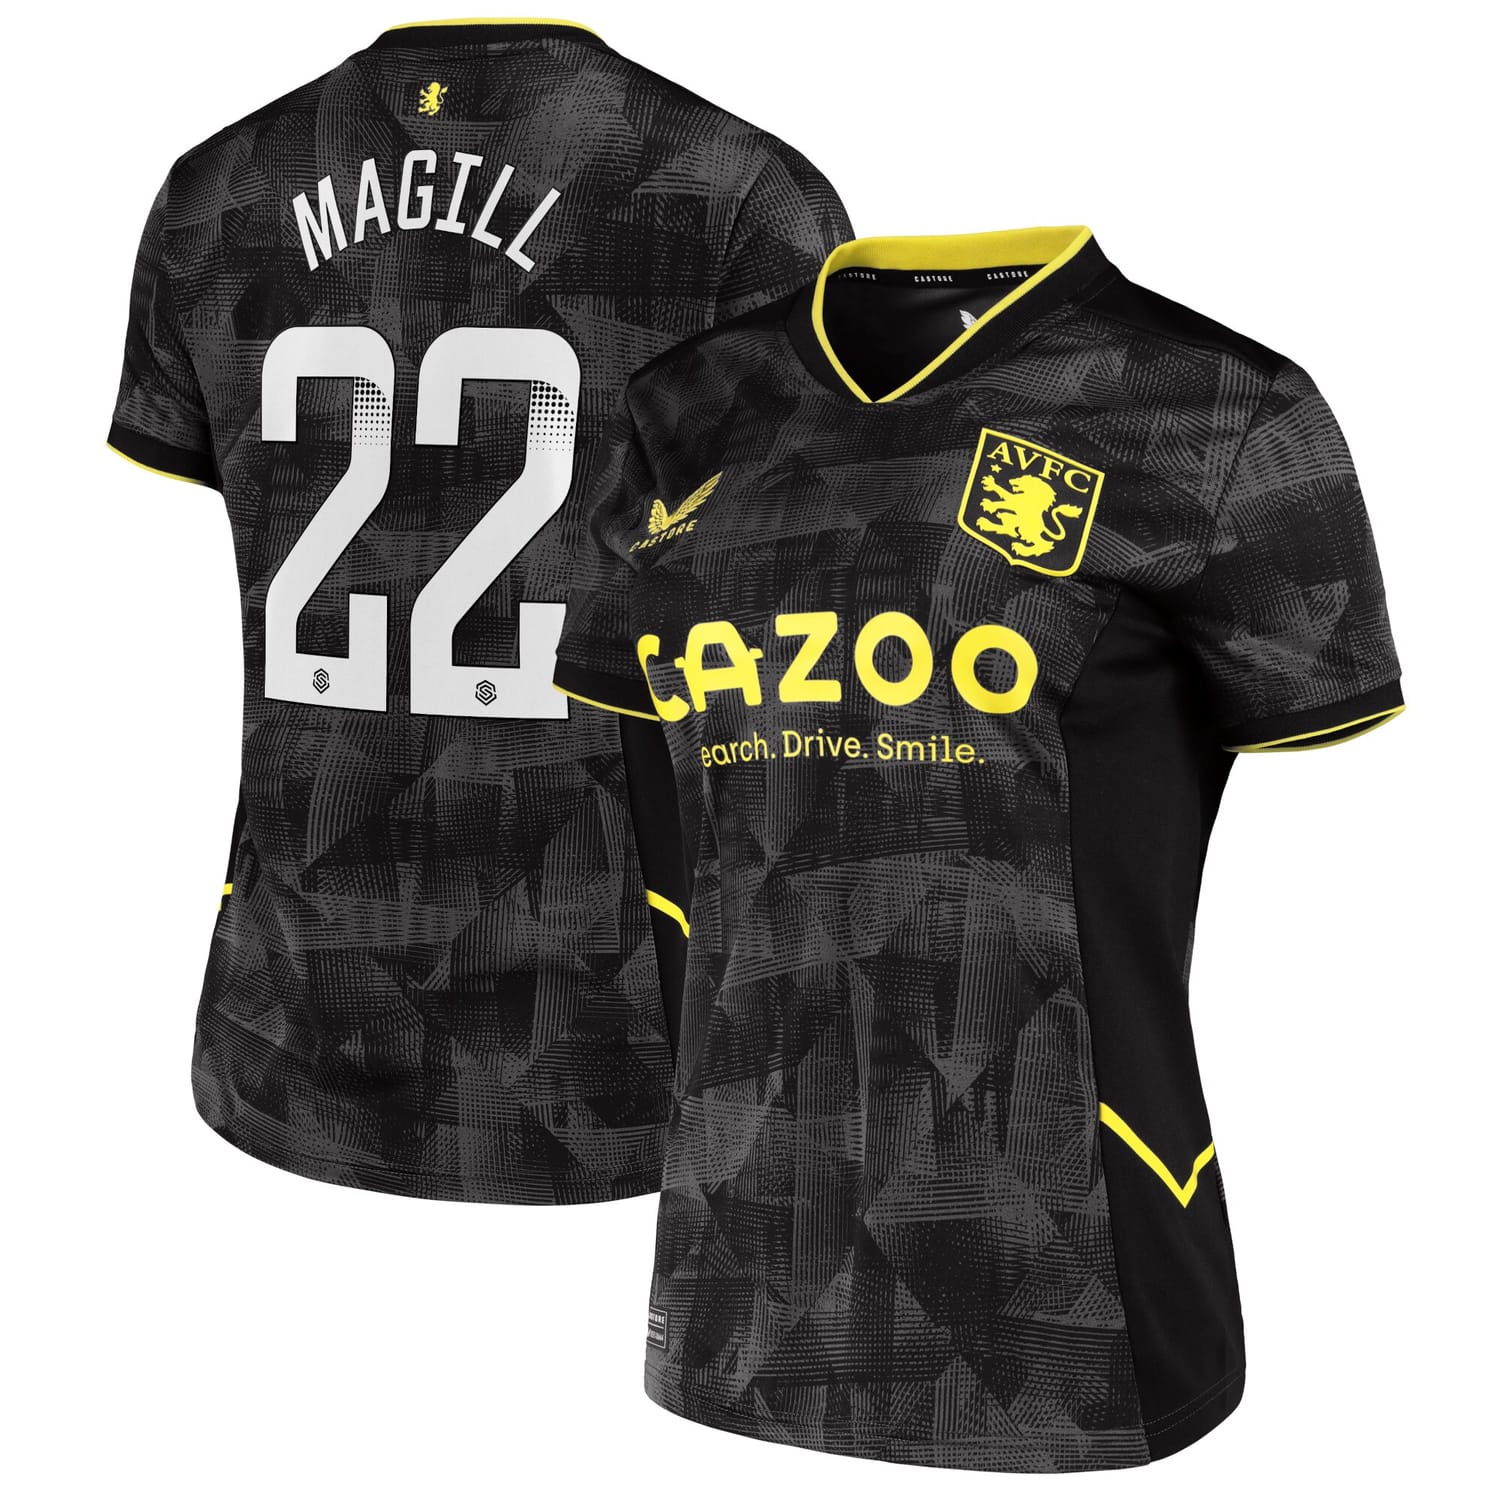 Premier League Aston Villa Third WSL Jersey Shirt 2022-23 player Simone Magill 22 printing for Women